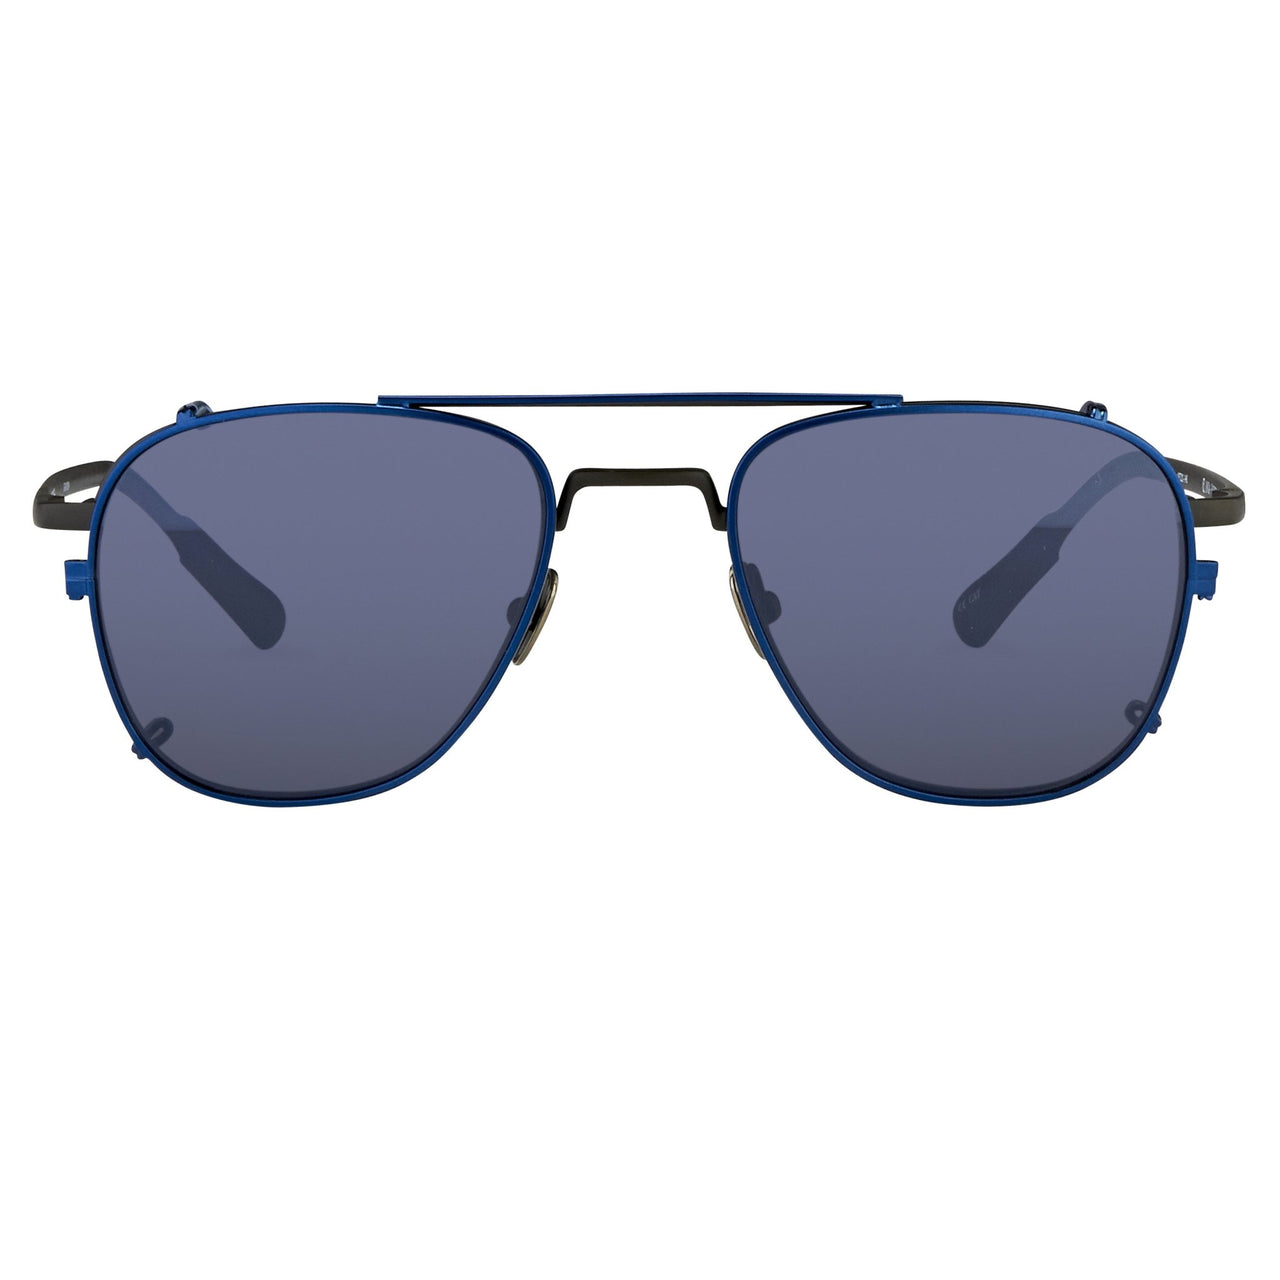 kris van assche sunglasses unisex rectangular titanium matte black blue clip on with blue lenses kva92c4sun